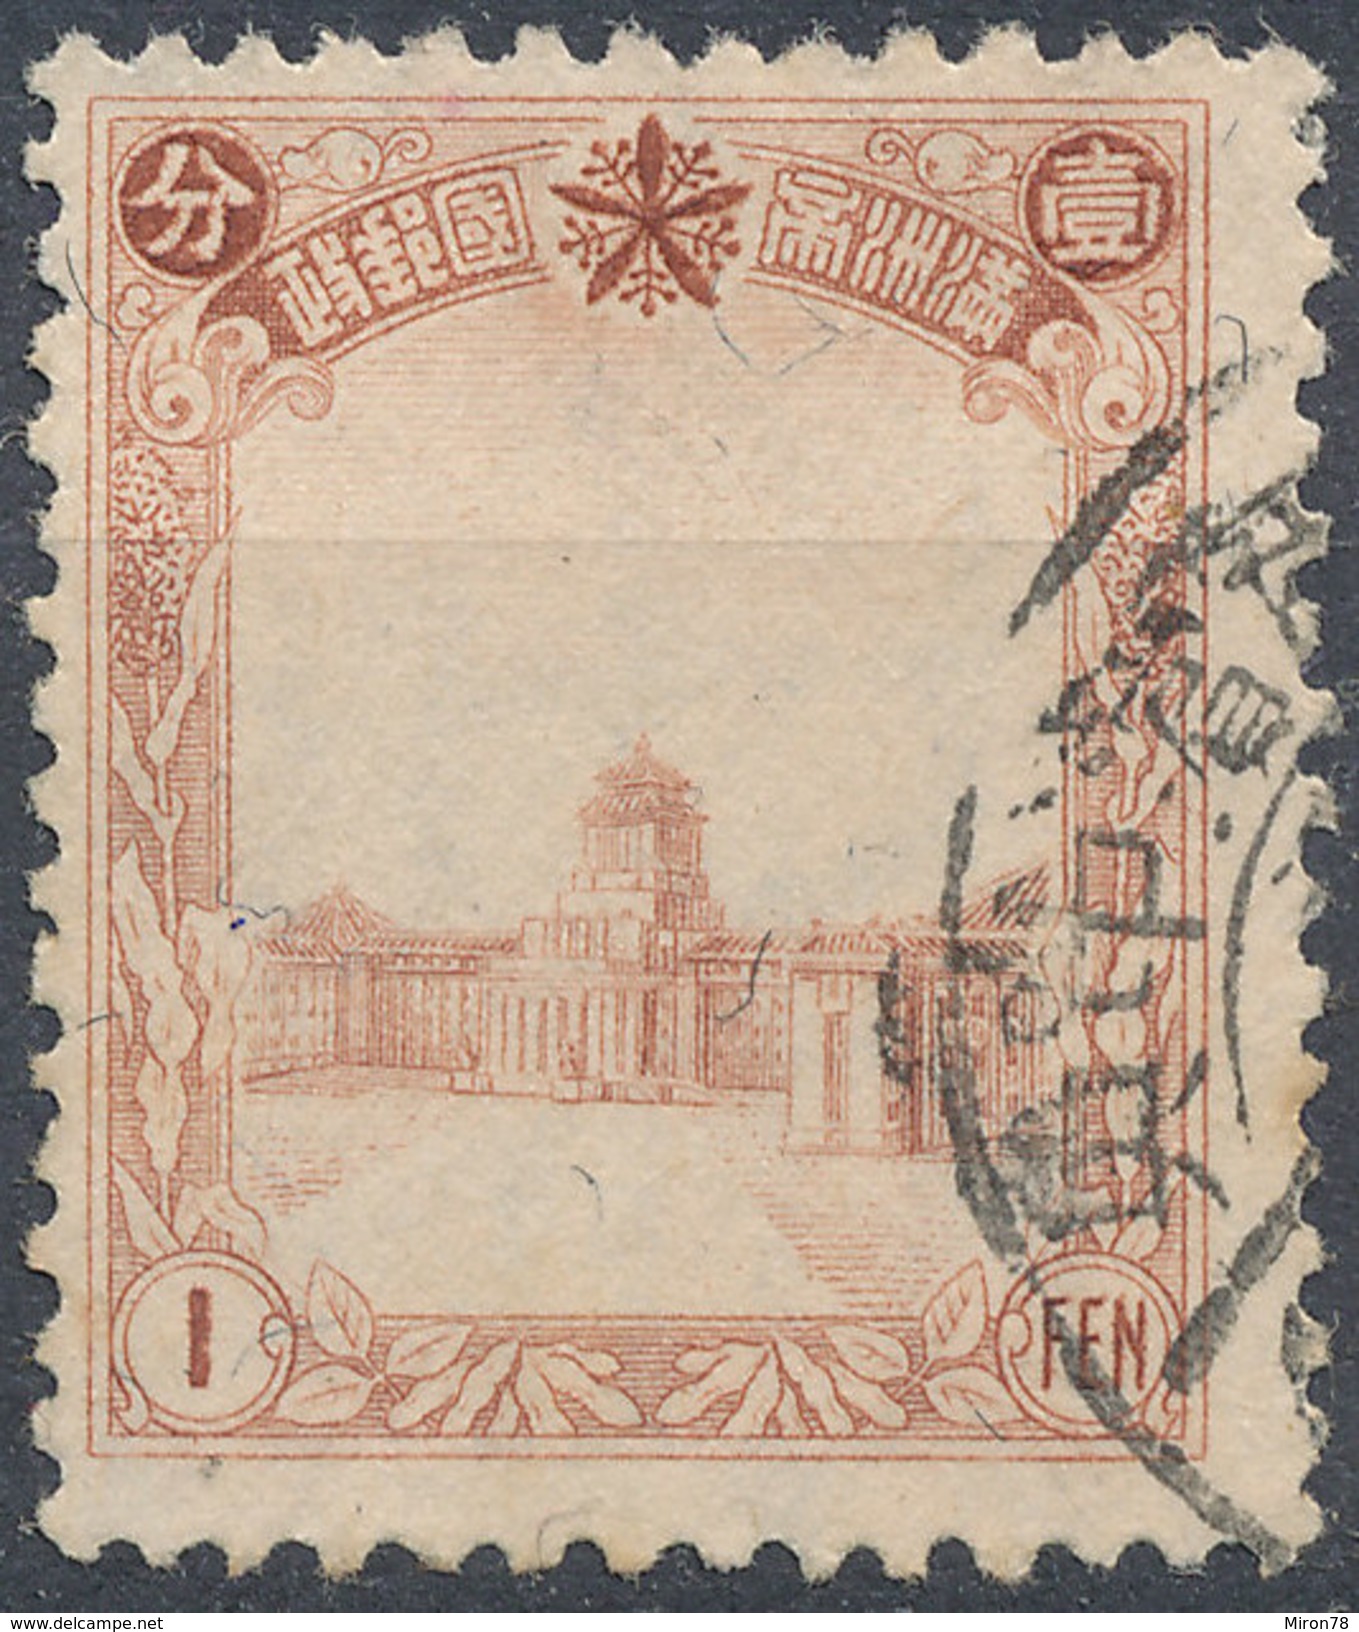 Stamp Manchuria 1936 Used - 1932-45 Mandchourie (Mandchoukouo)